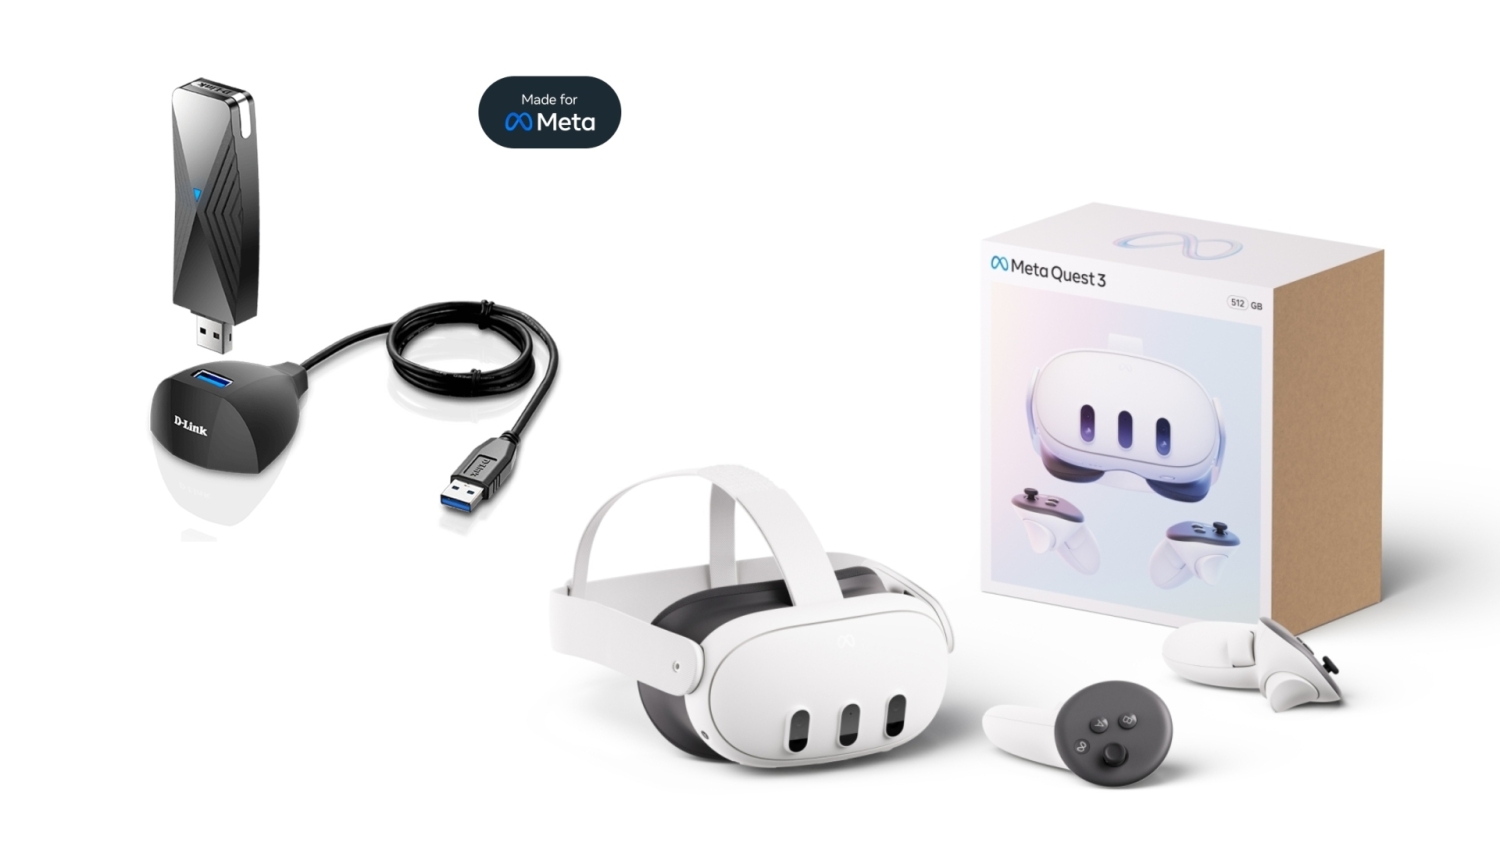 TweakTown Enlarged Image - Meta Quest 3 and D-Link VR Air Bridge deliver wireless PC VR gaming.